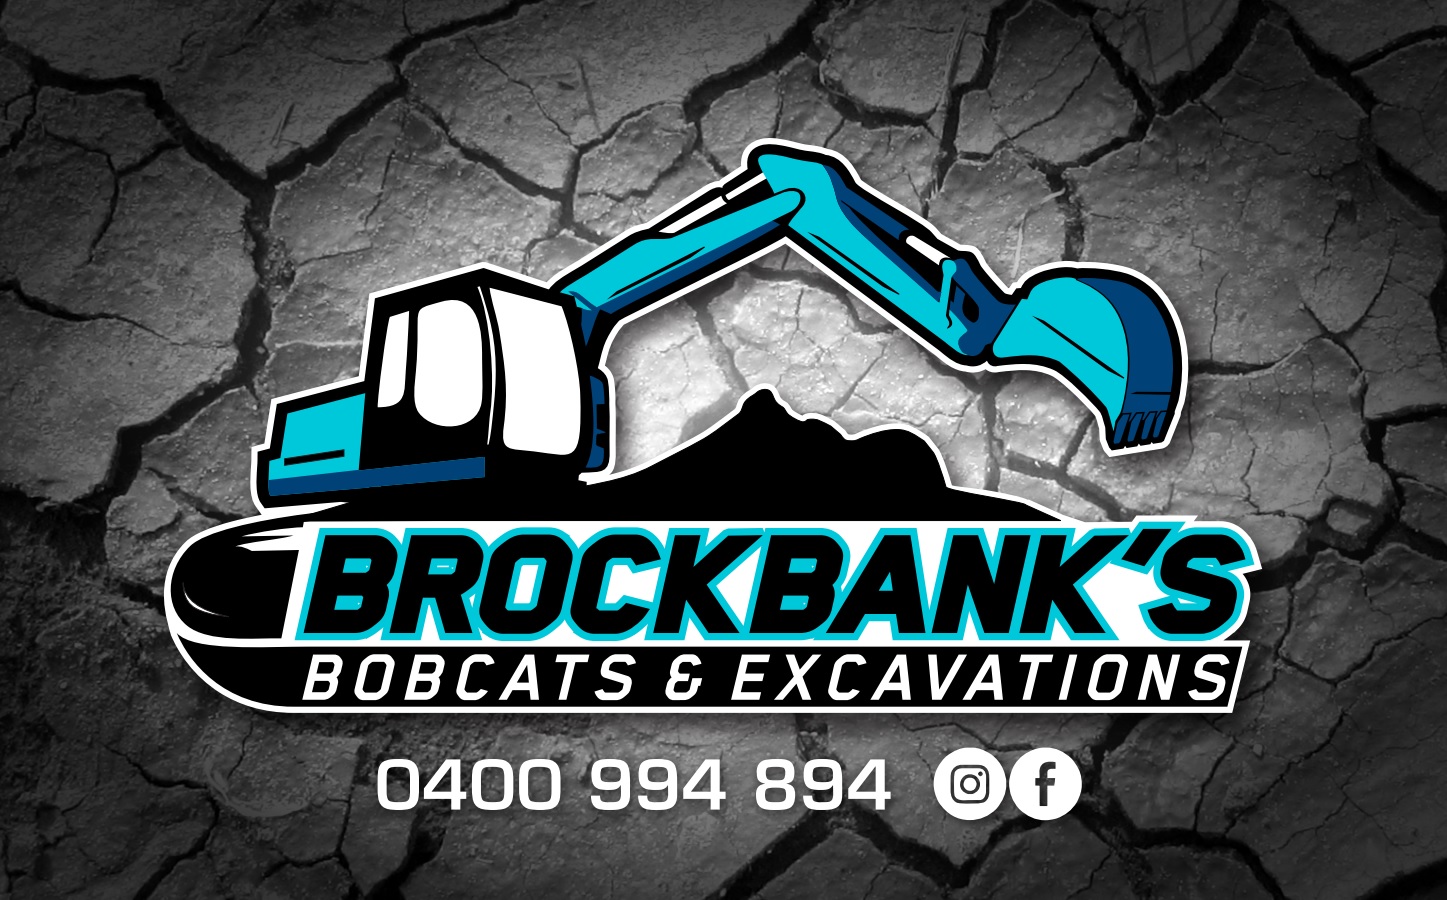 Brockbank's Bobcats & Excavations